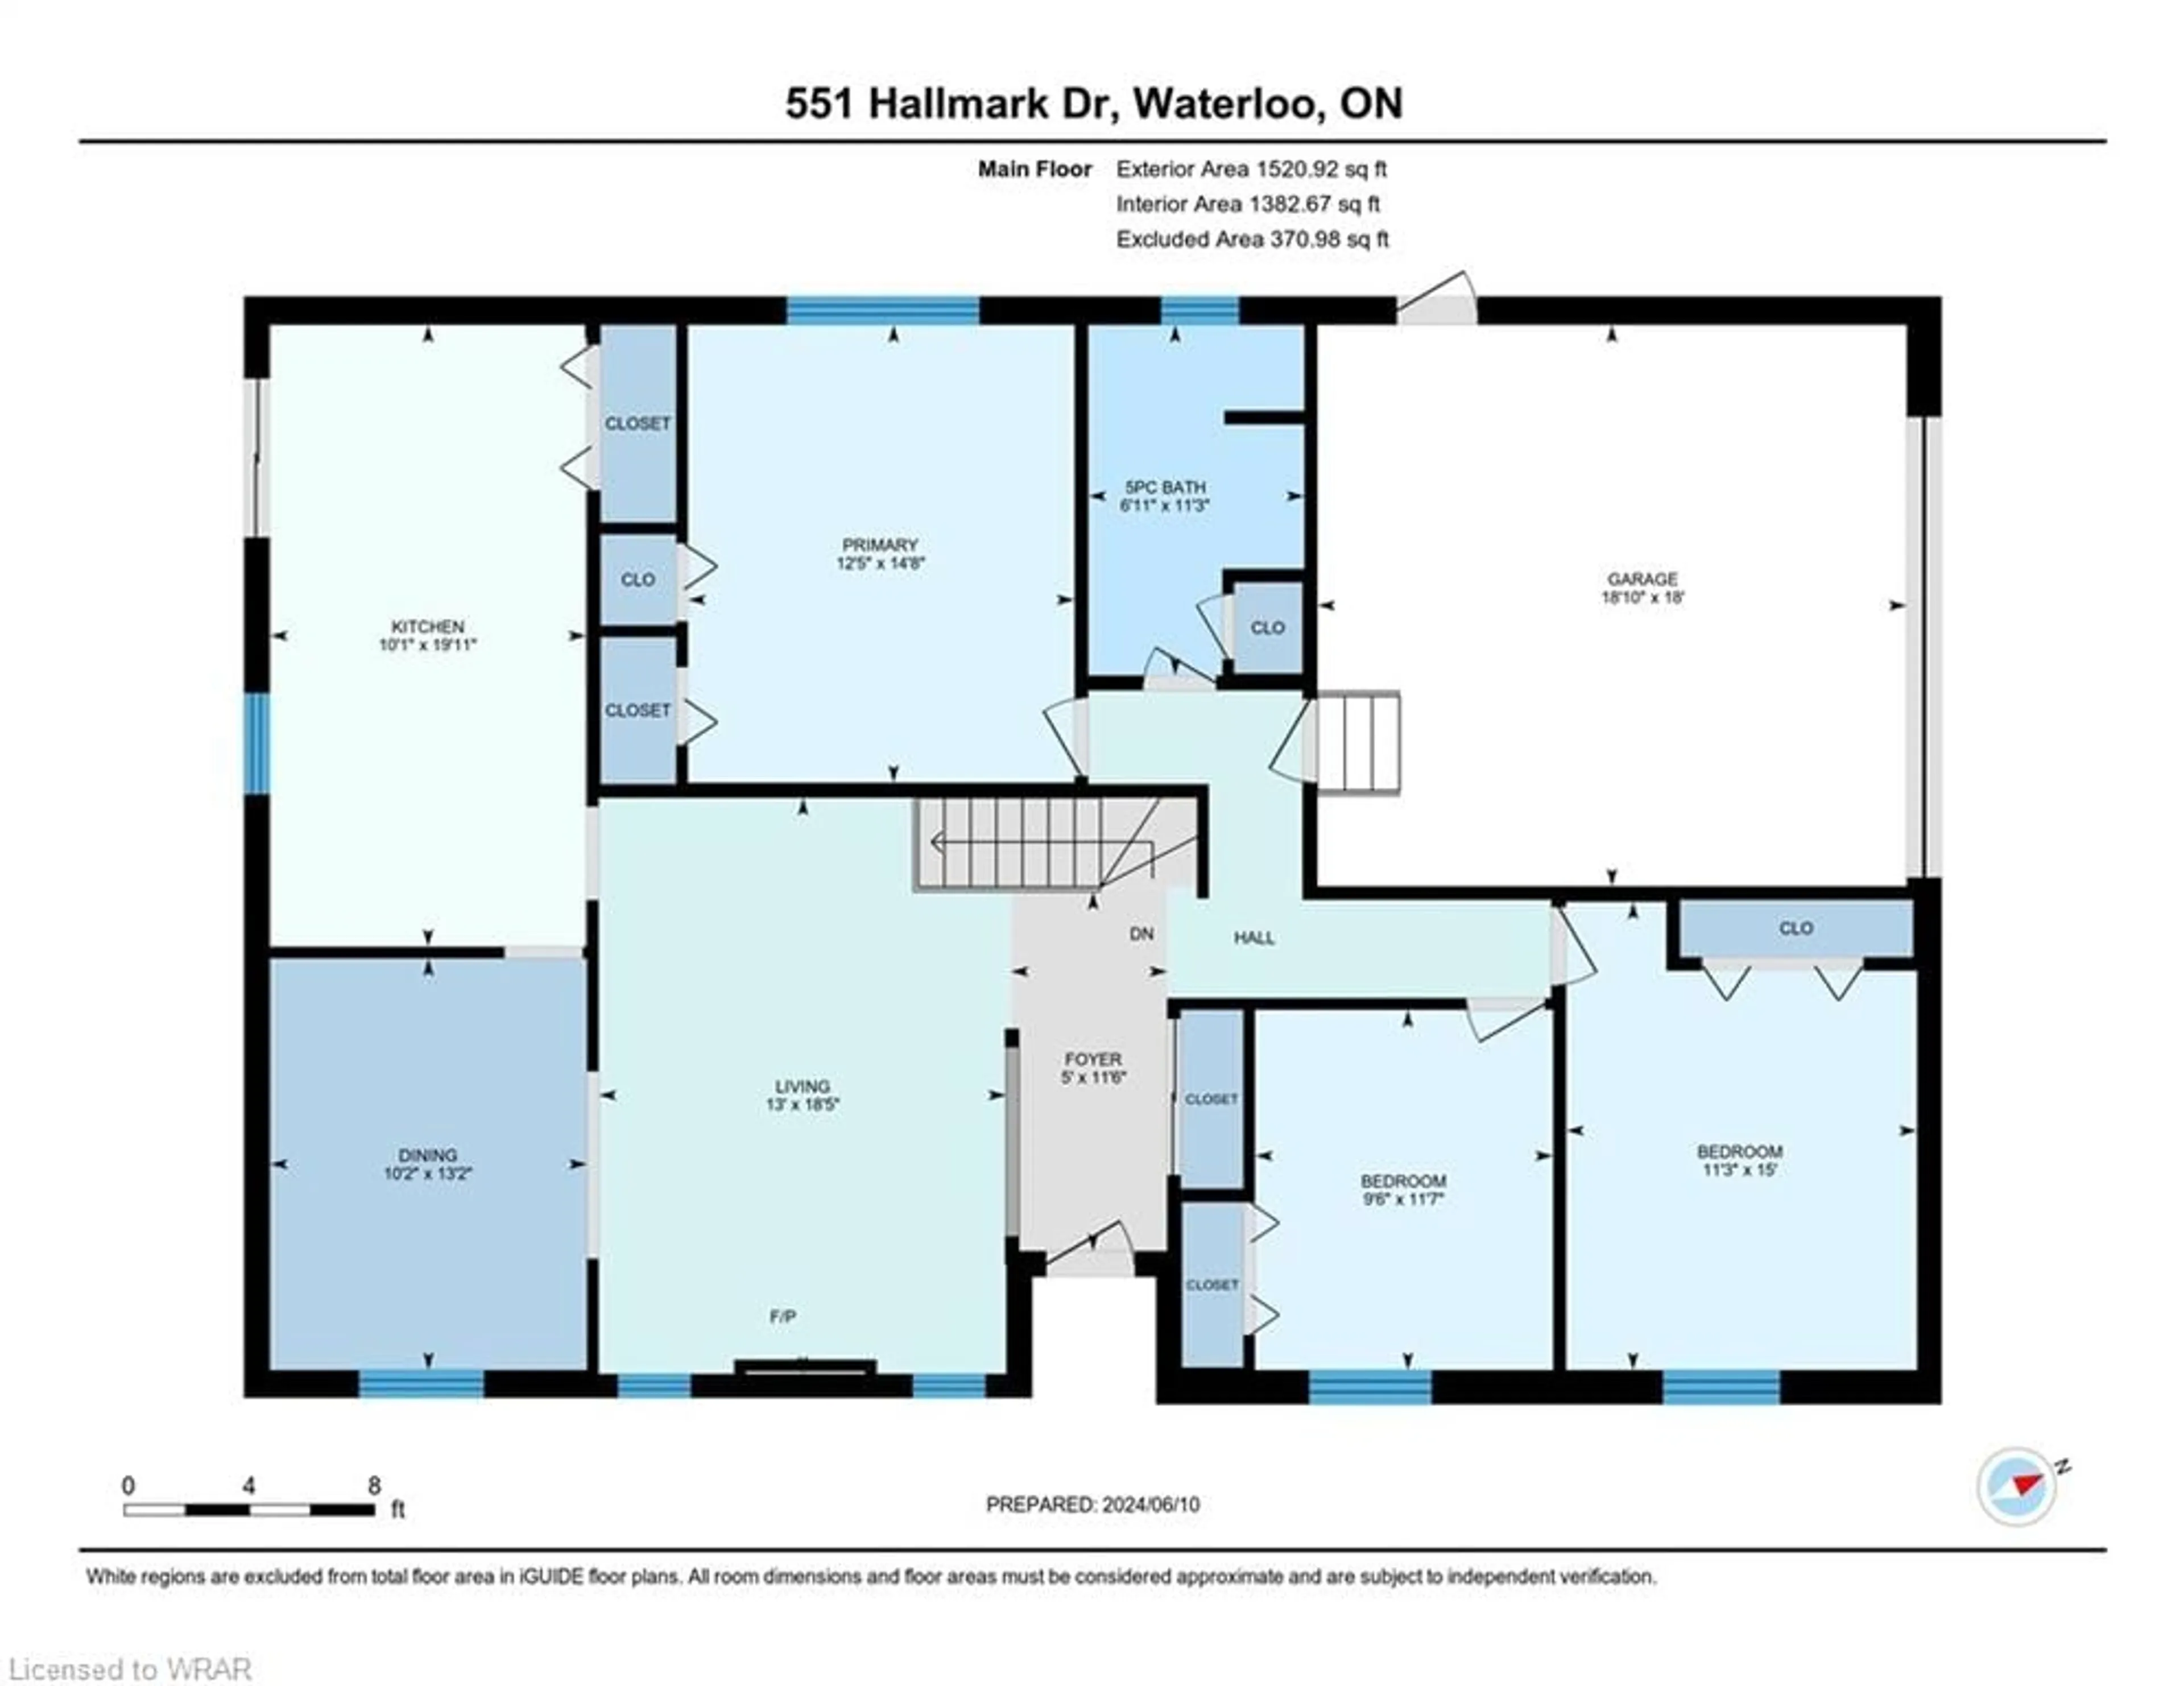 Floor plan for 551 Hallmark Dr, Waterloo Ontario N2K 3P3